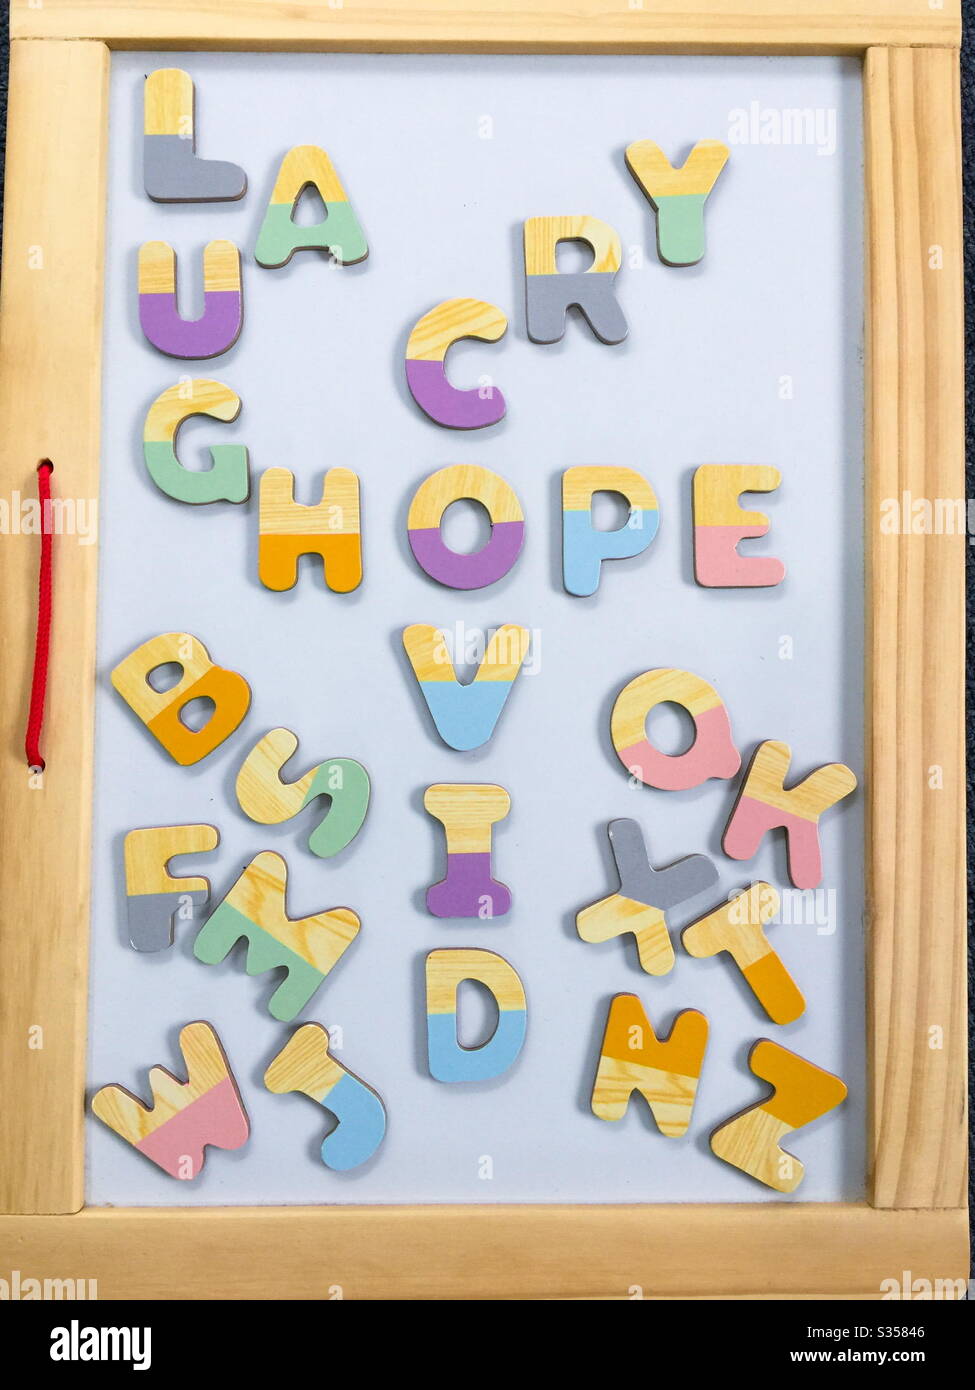 Words using Art alphabet stencils, COVID, hope, laugh, cry Stock Photo